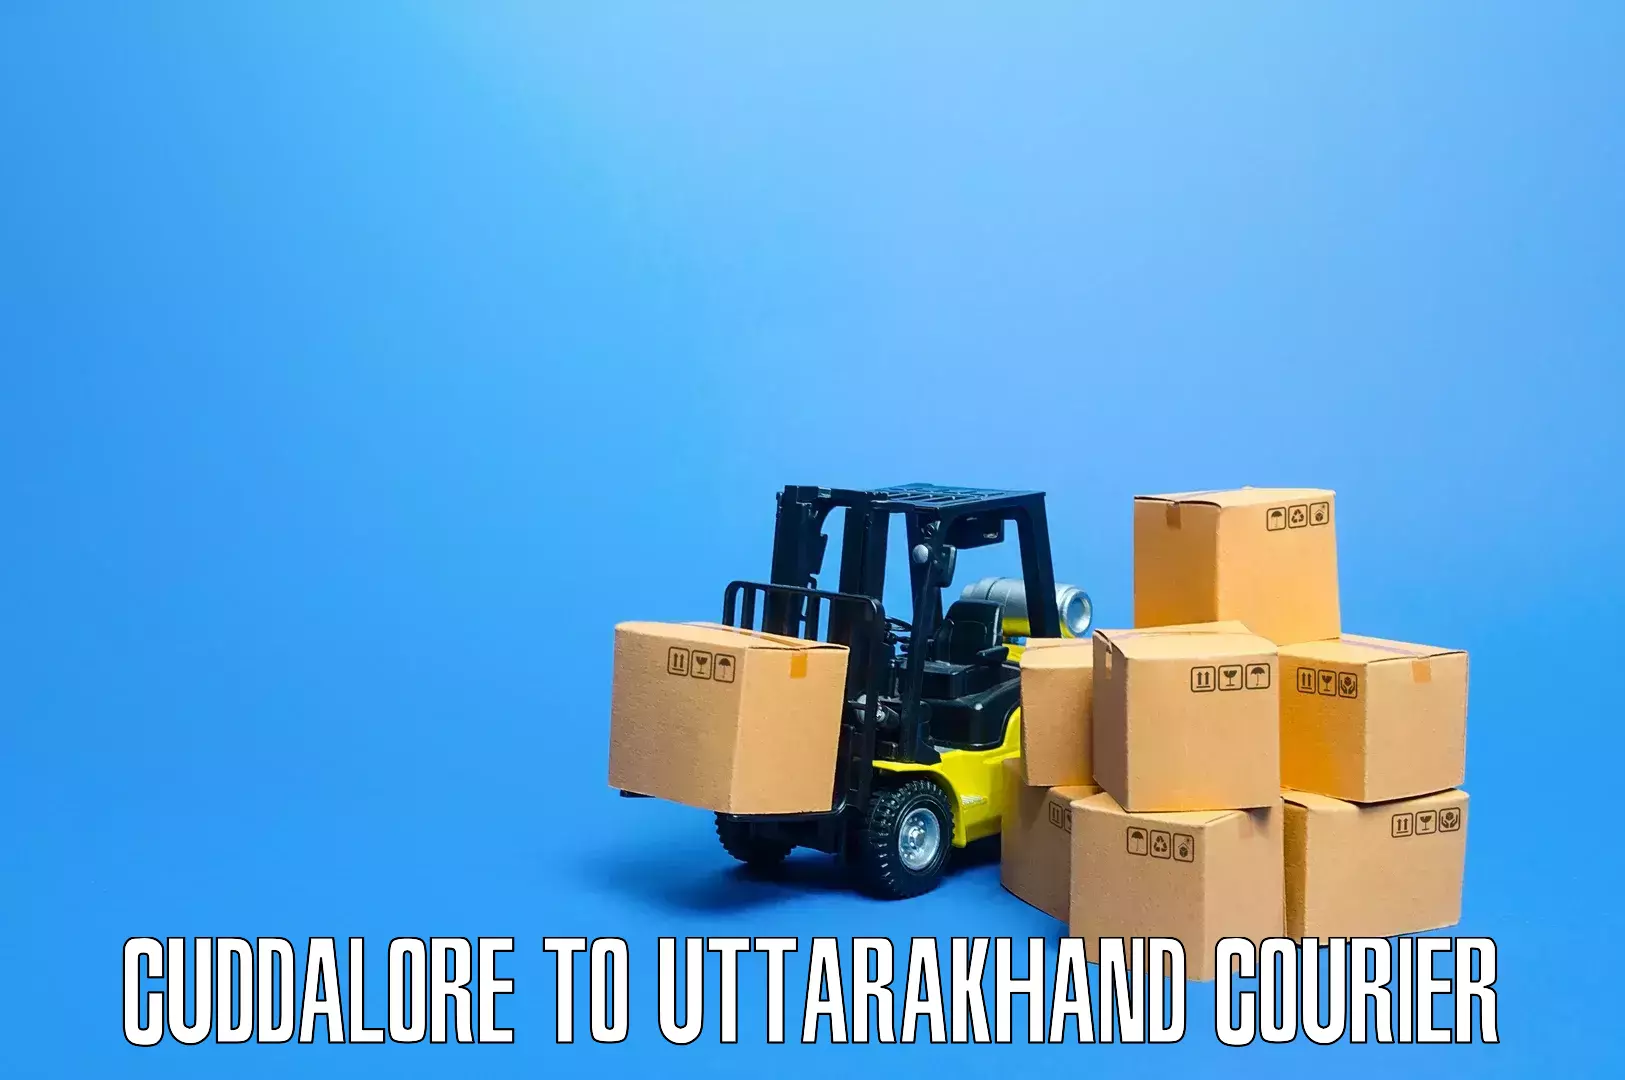 Specialized moving company Cuddalore to Joshimath